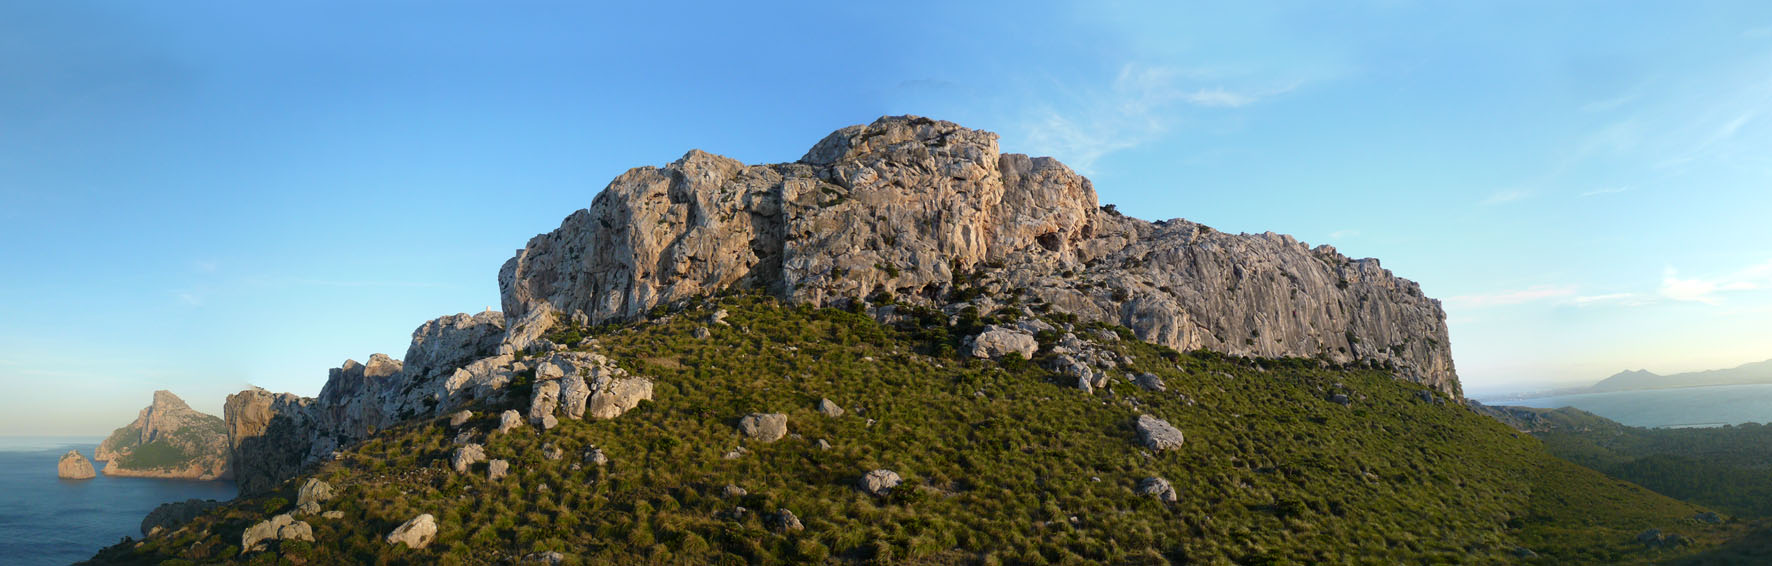 Майорка: скалы Creveta и Formentor 